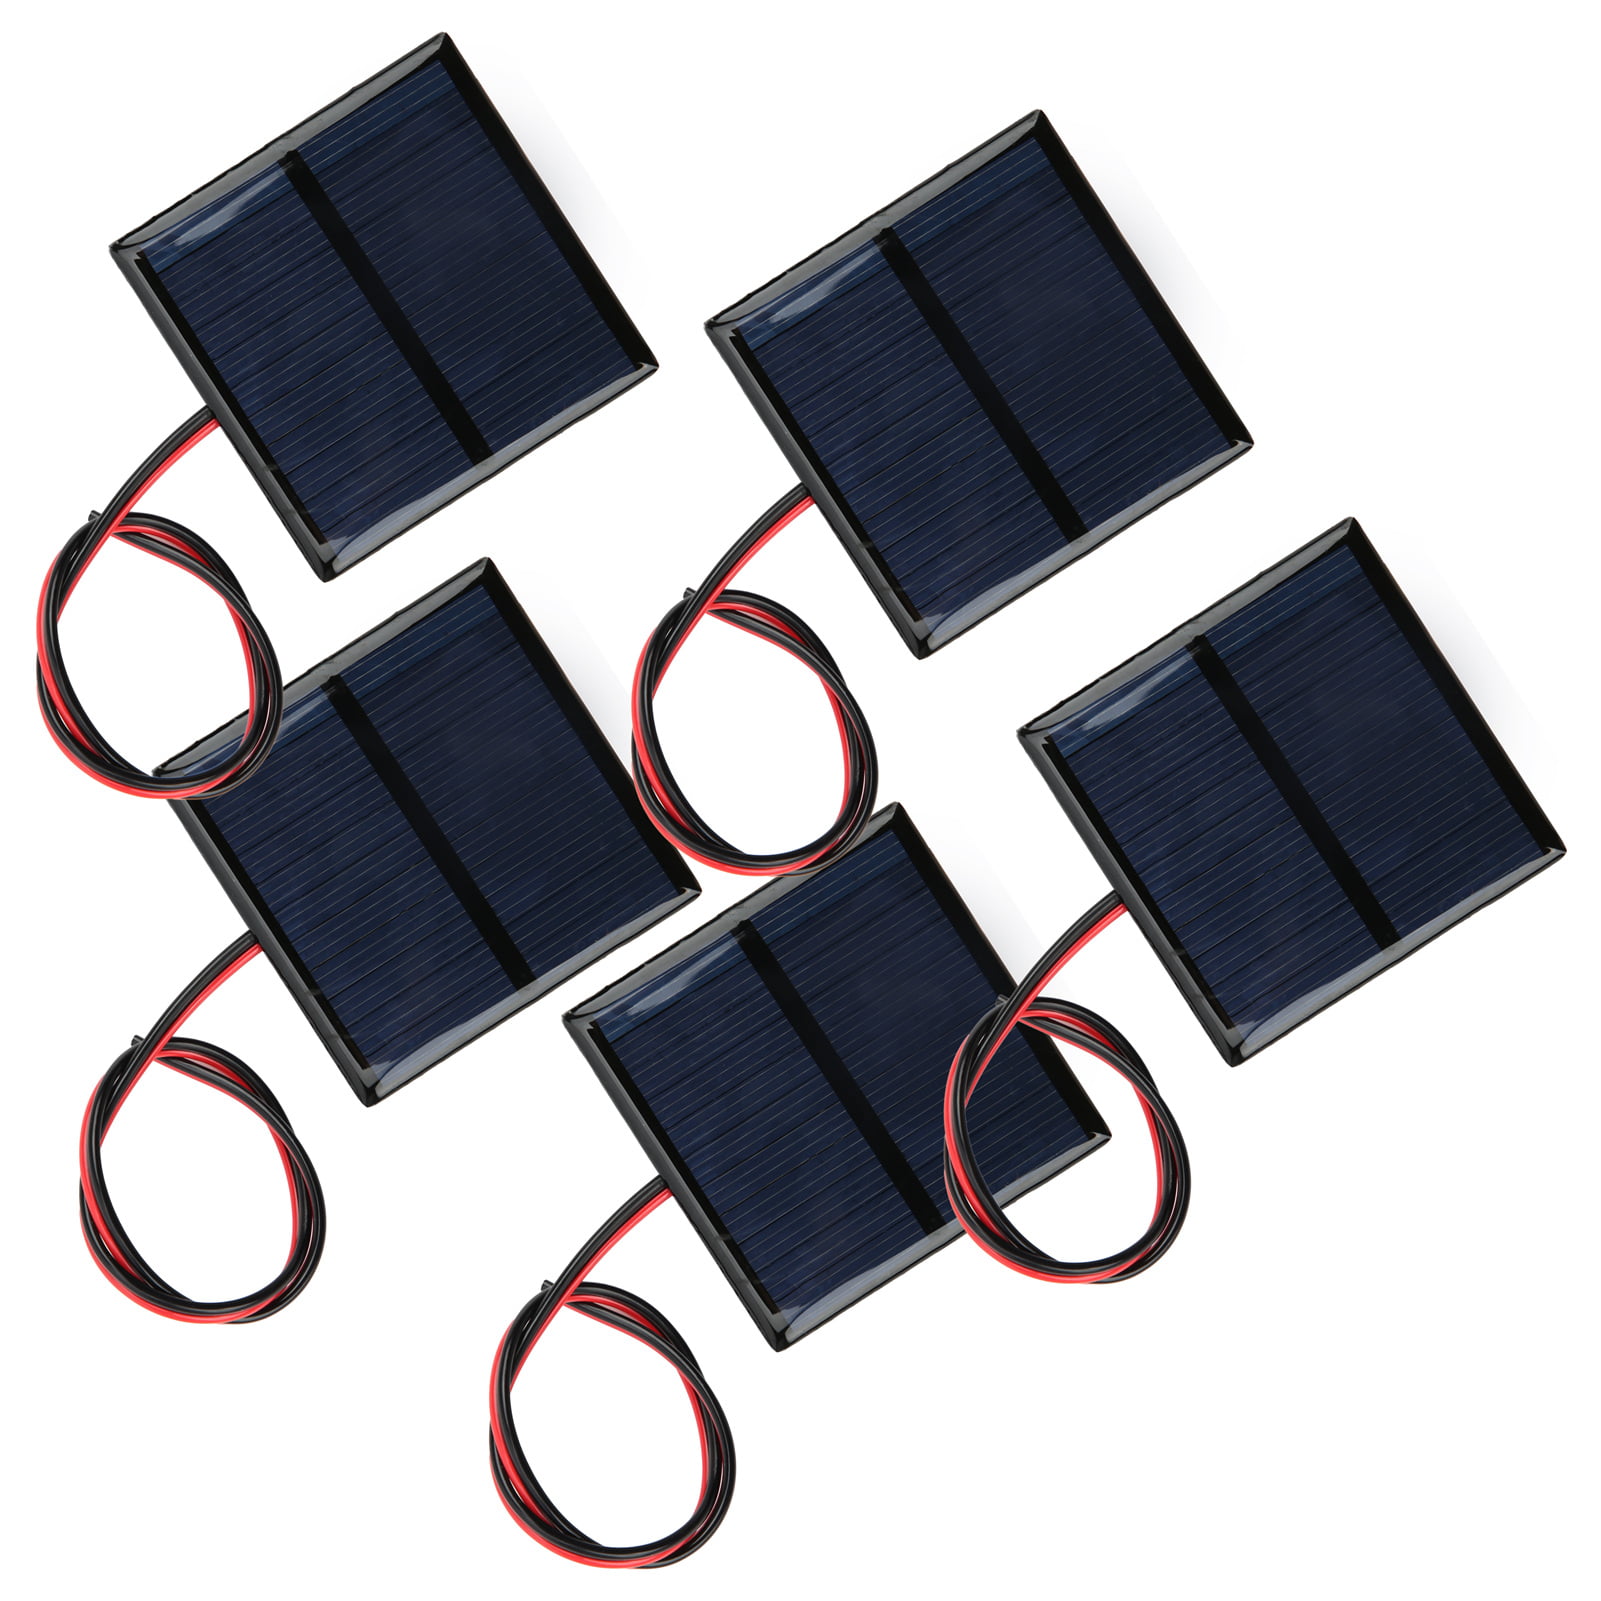 100pcs 0.5V 320mA Mini Solar Battery Panels Cell DIY Battery Charge 52*19mm Set 